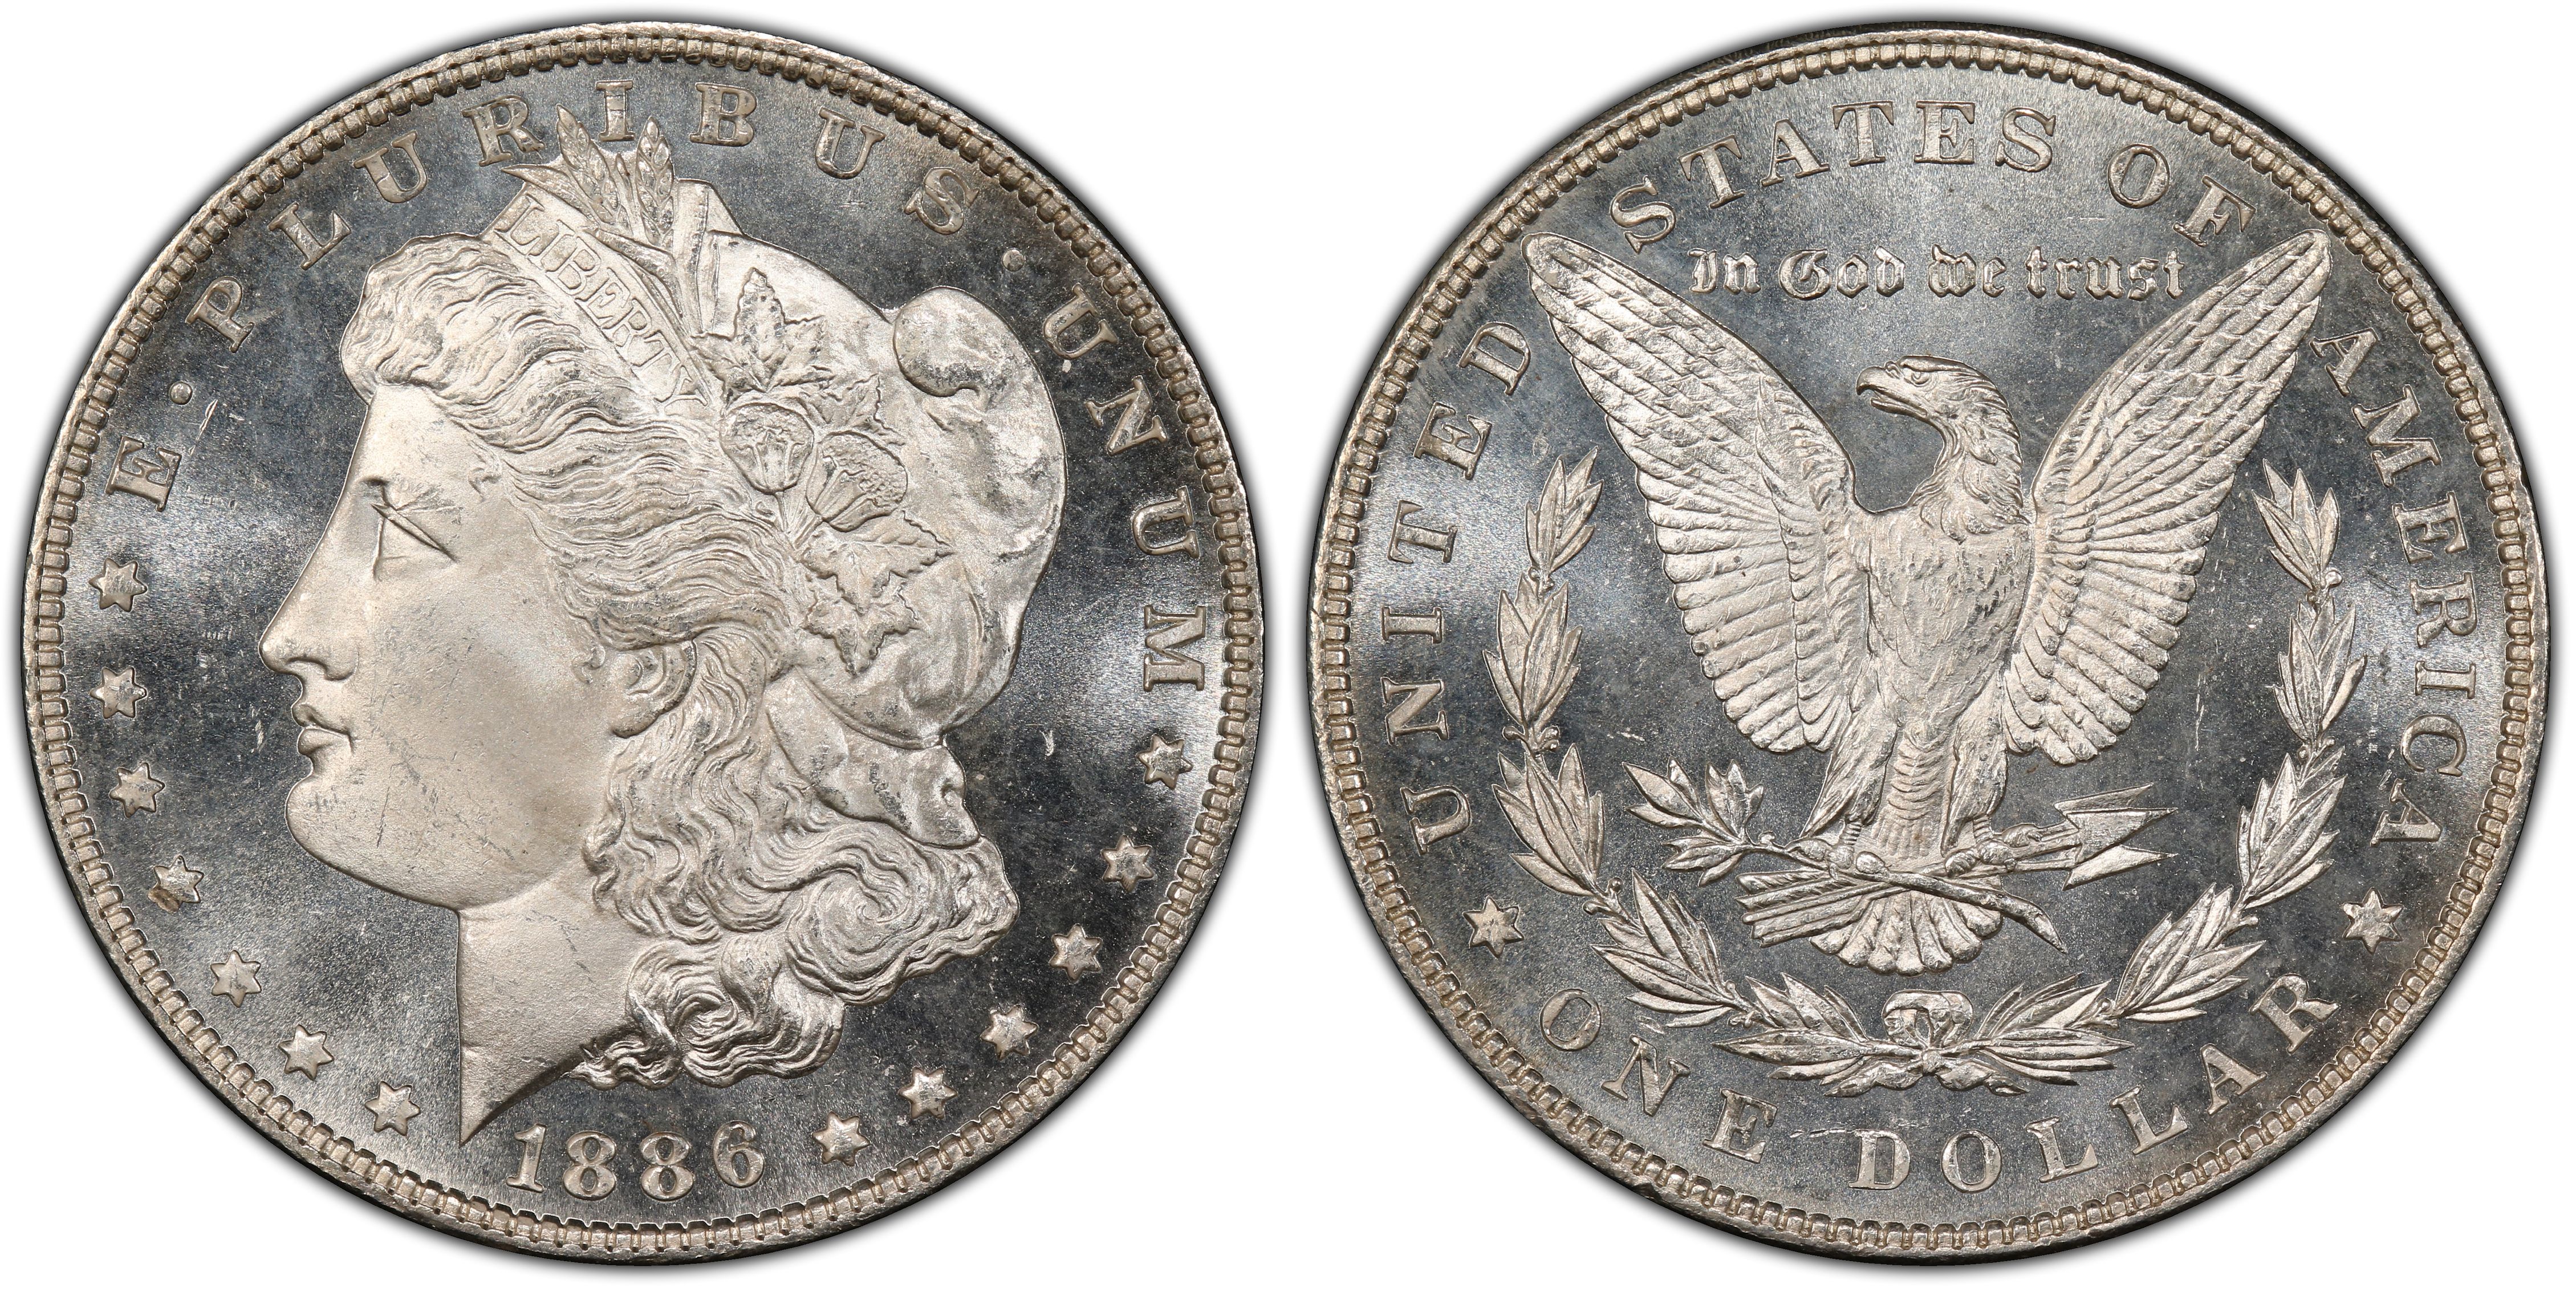 1886 $1, PL (Regular Strike) Morgan Dollar - PCGS CoinFacts